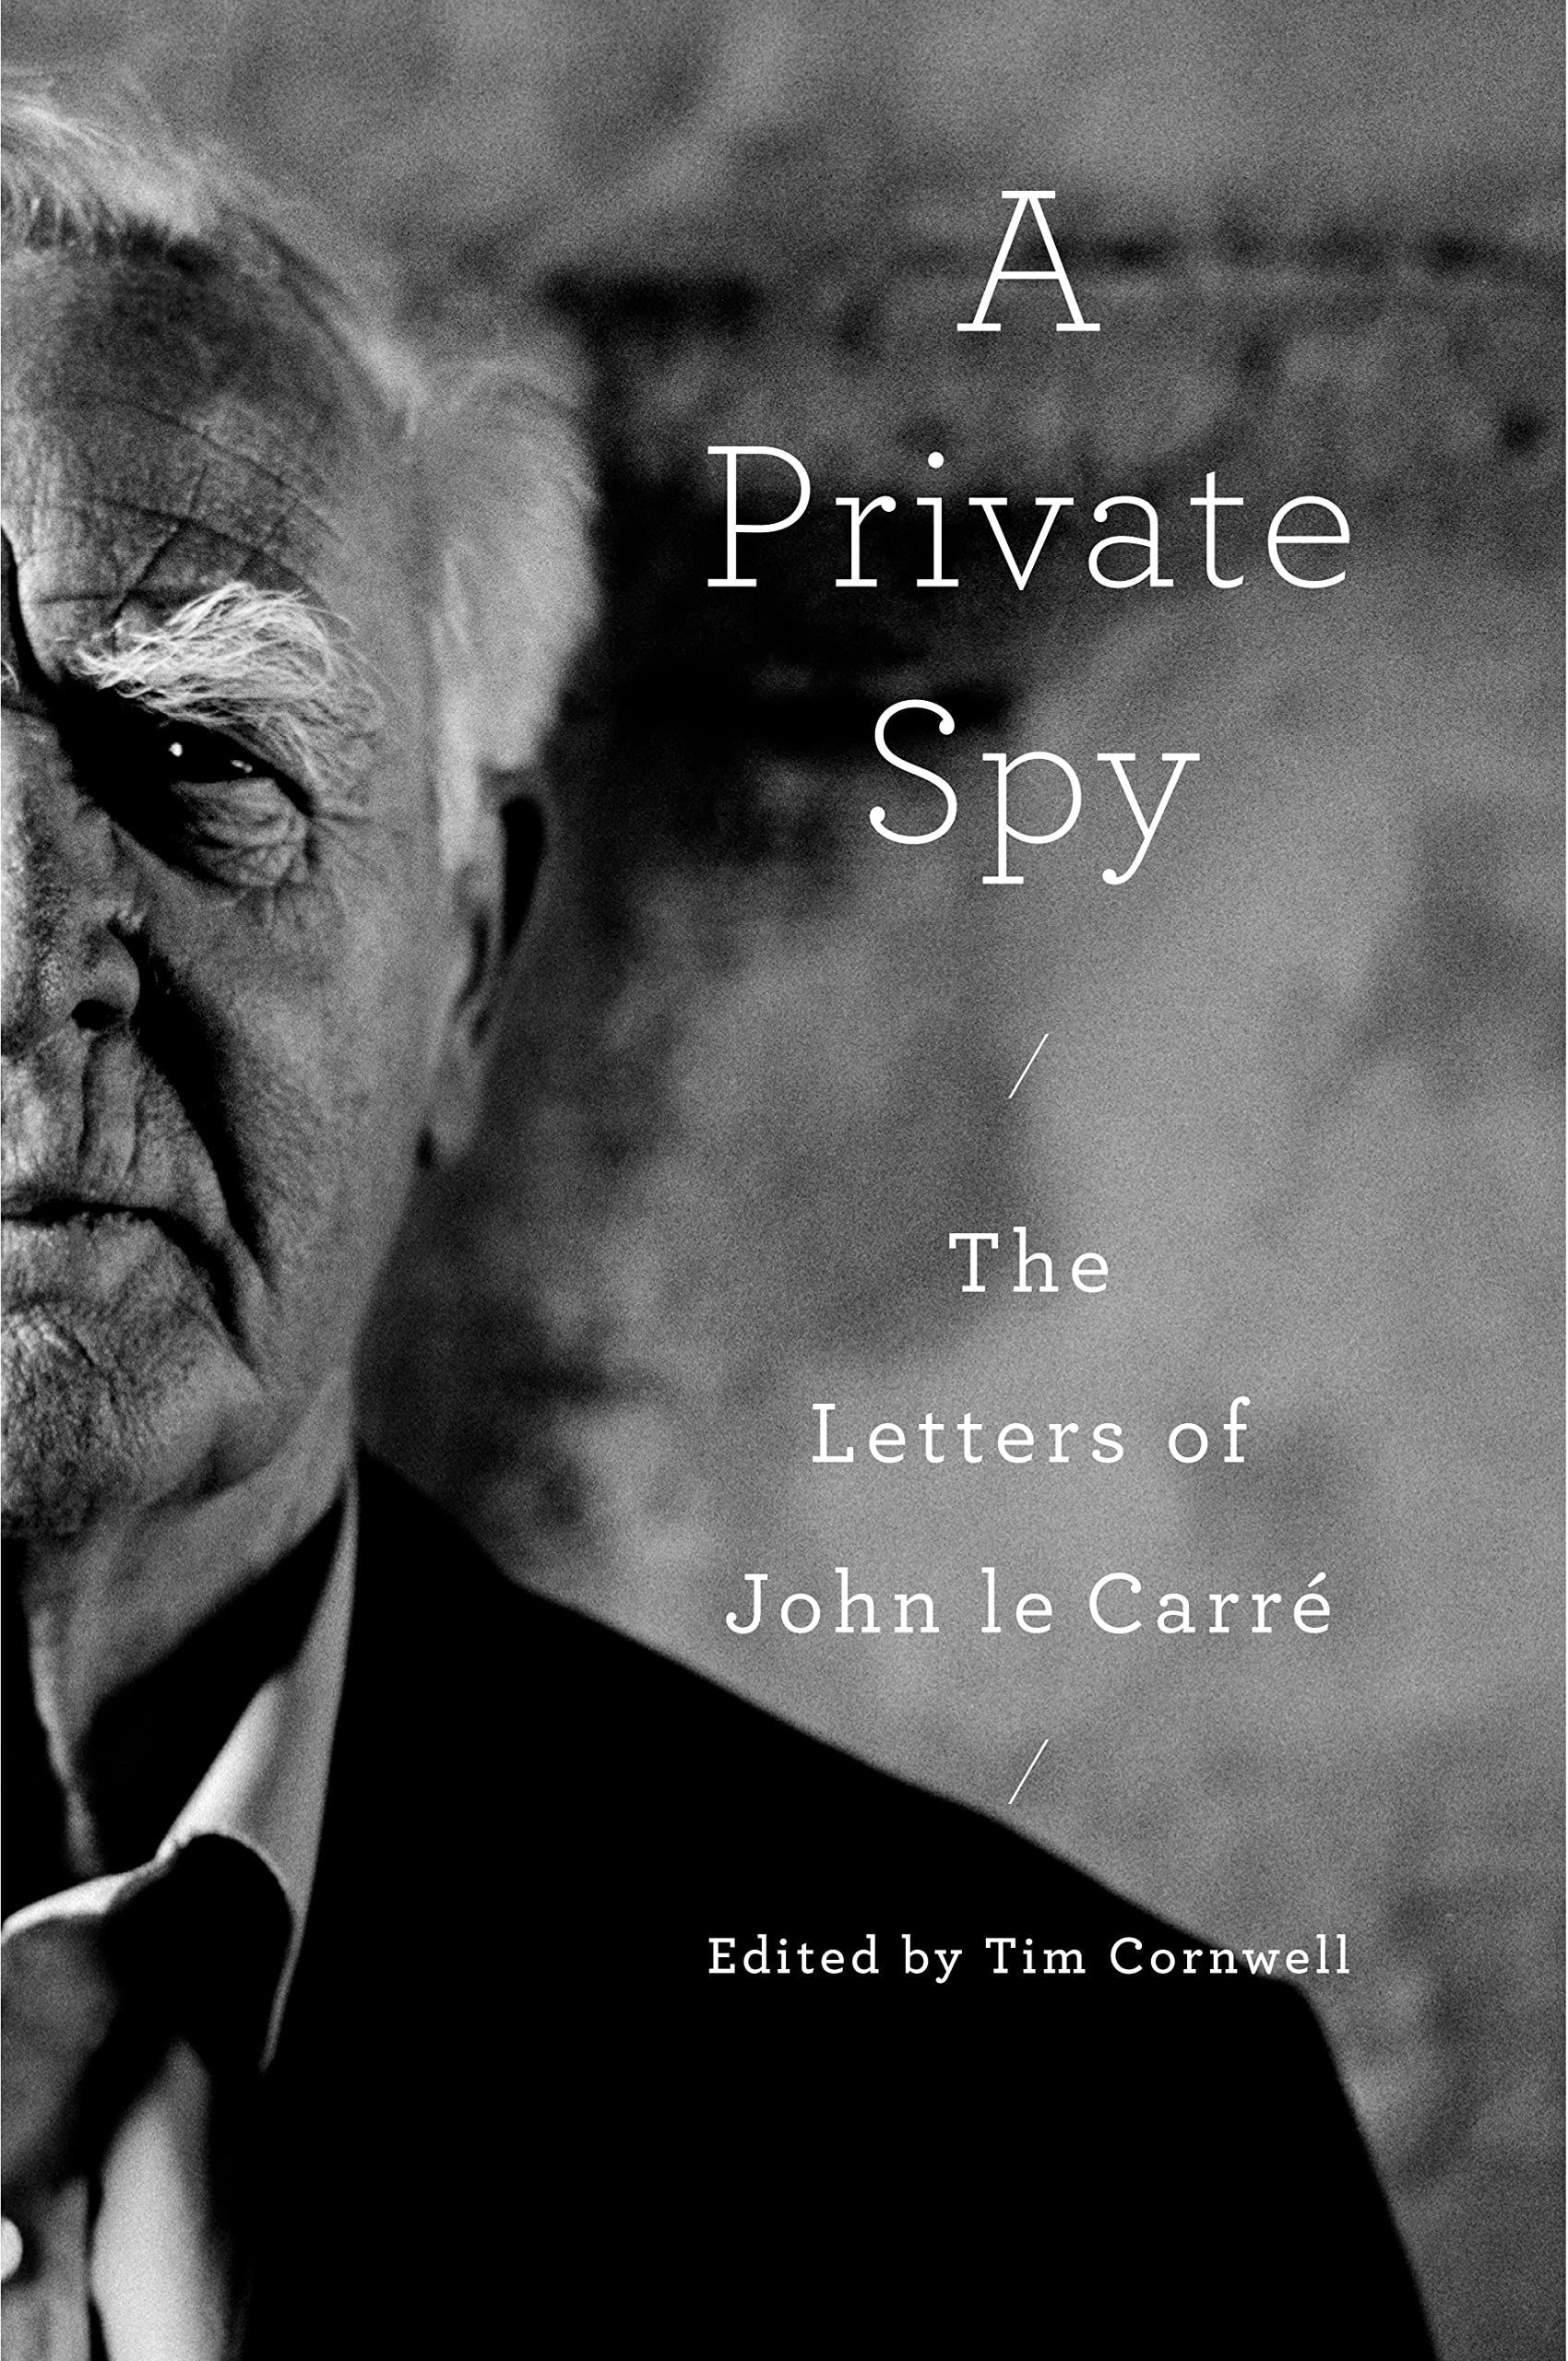 The Escape Artist: On John le Carré’s “A Private Spy” and Suleika Dawson’s “The Secret Heart”